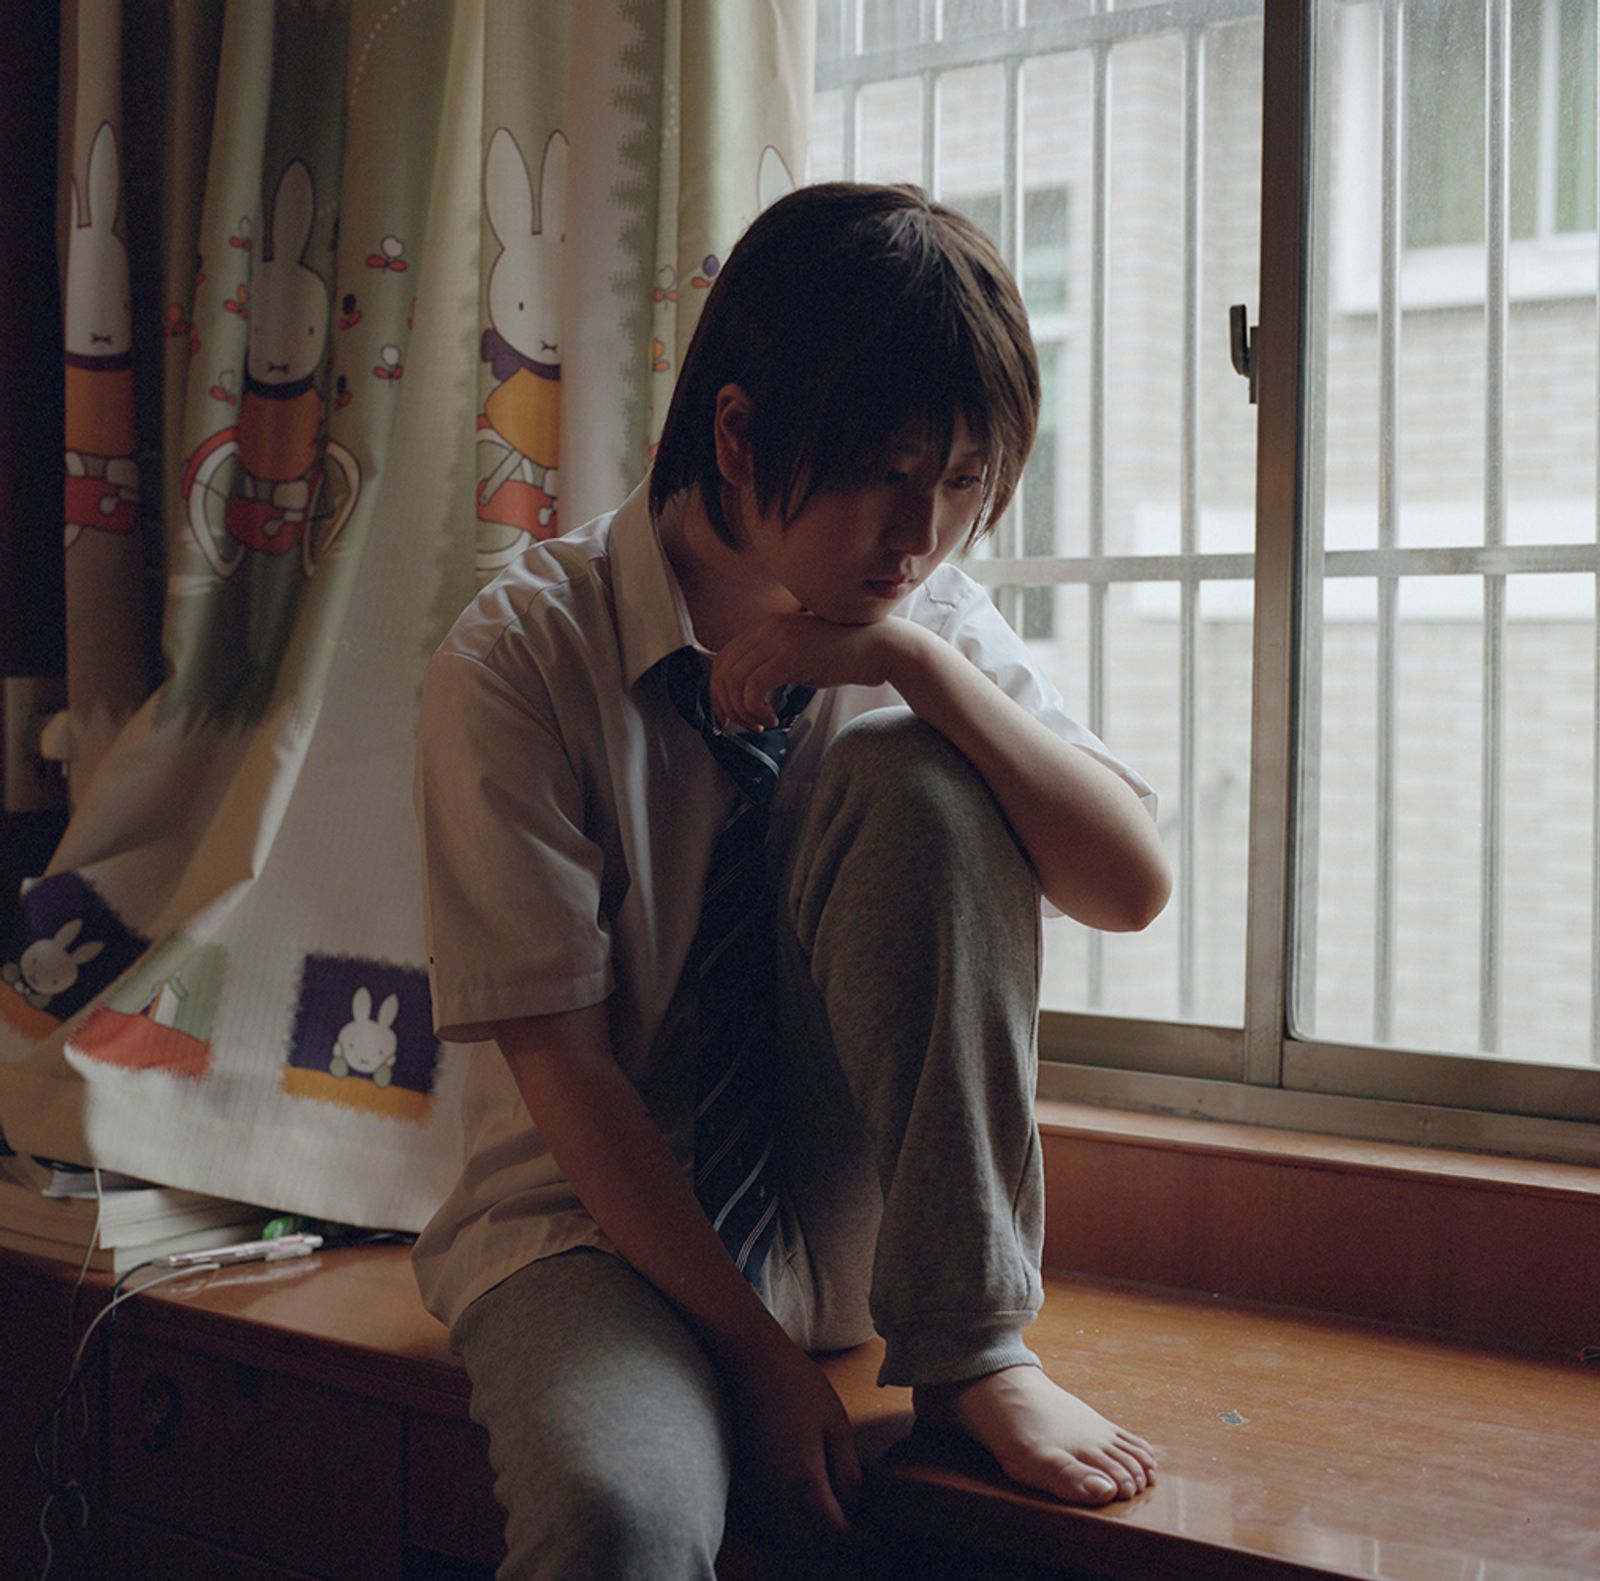 © Bowei Yang - Lu sitting aside by the window in her room, Hangzhou, China, 2013.